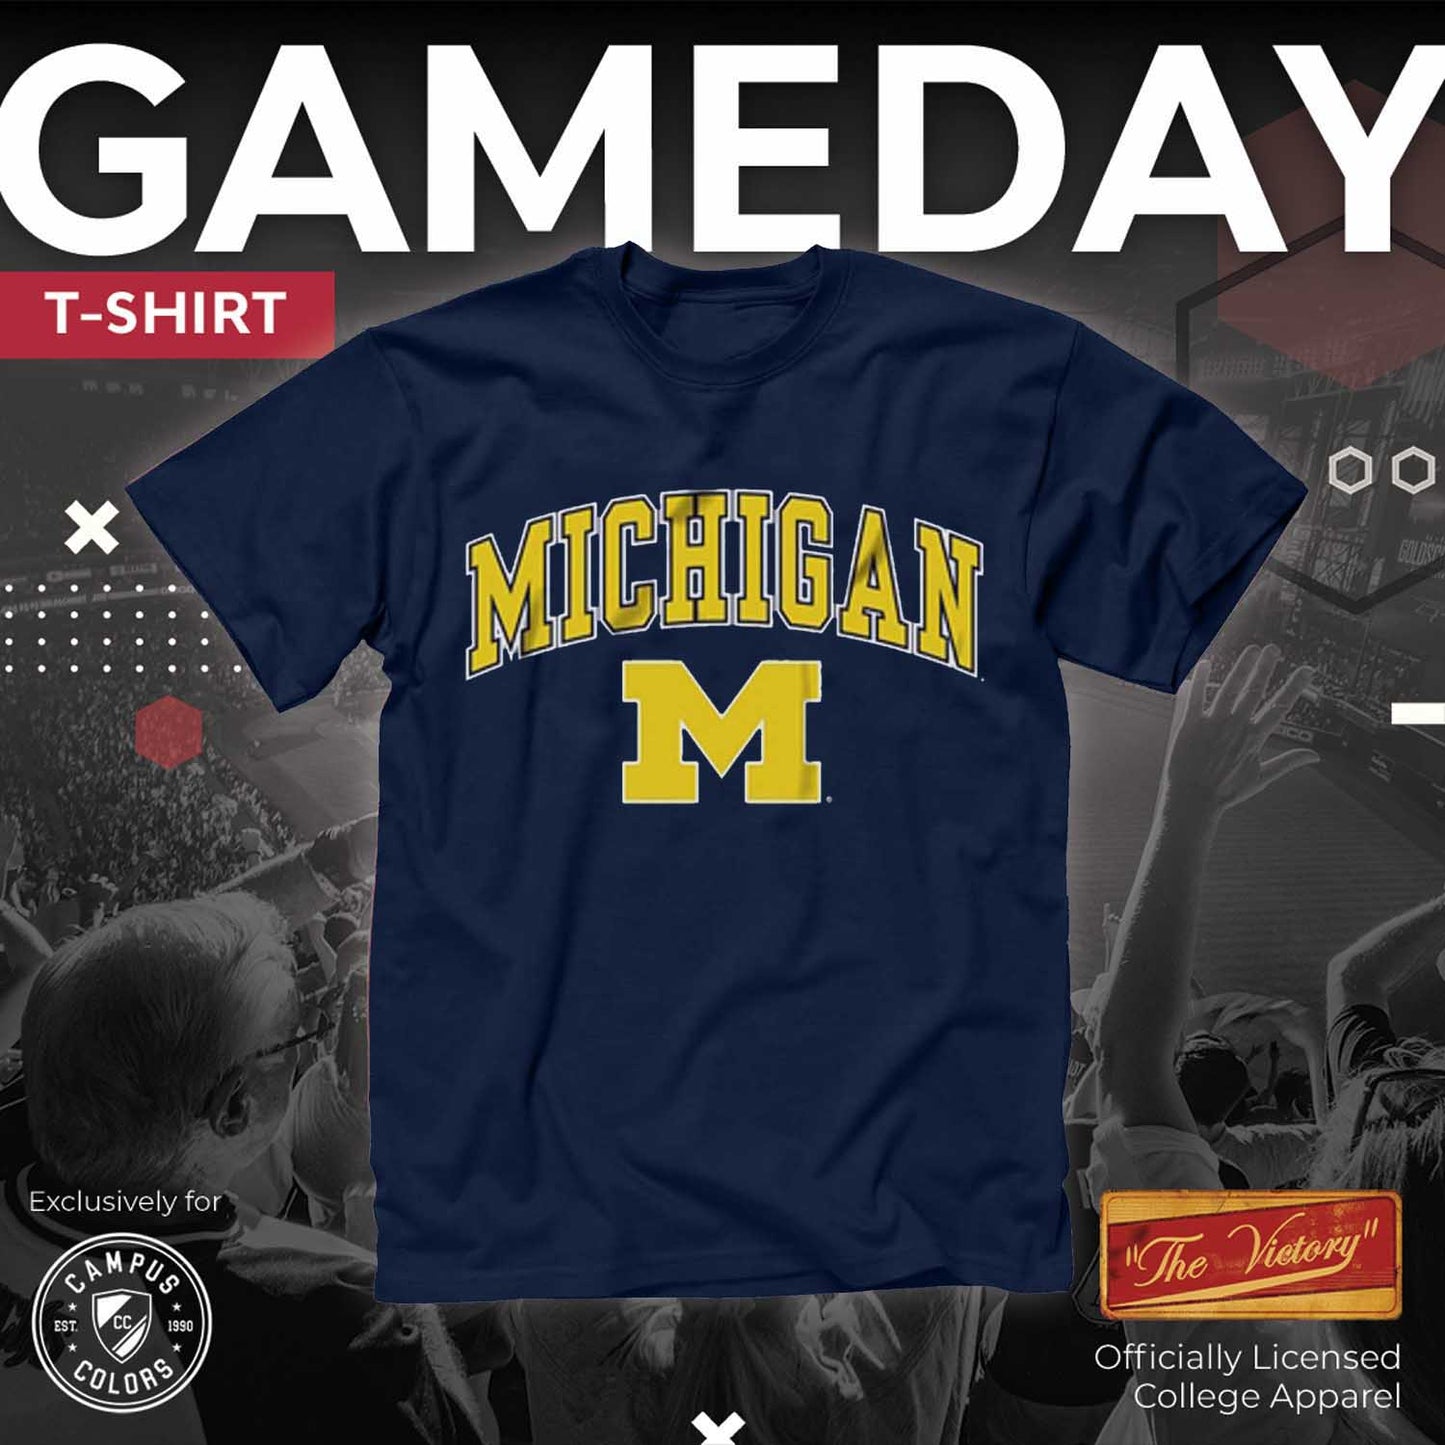 Michigan Wolverines NCAA Adult Gameday Cotton T-Shirt - Navy